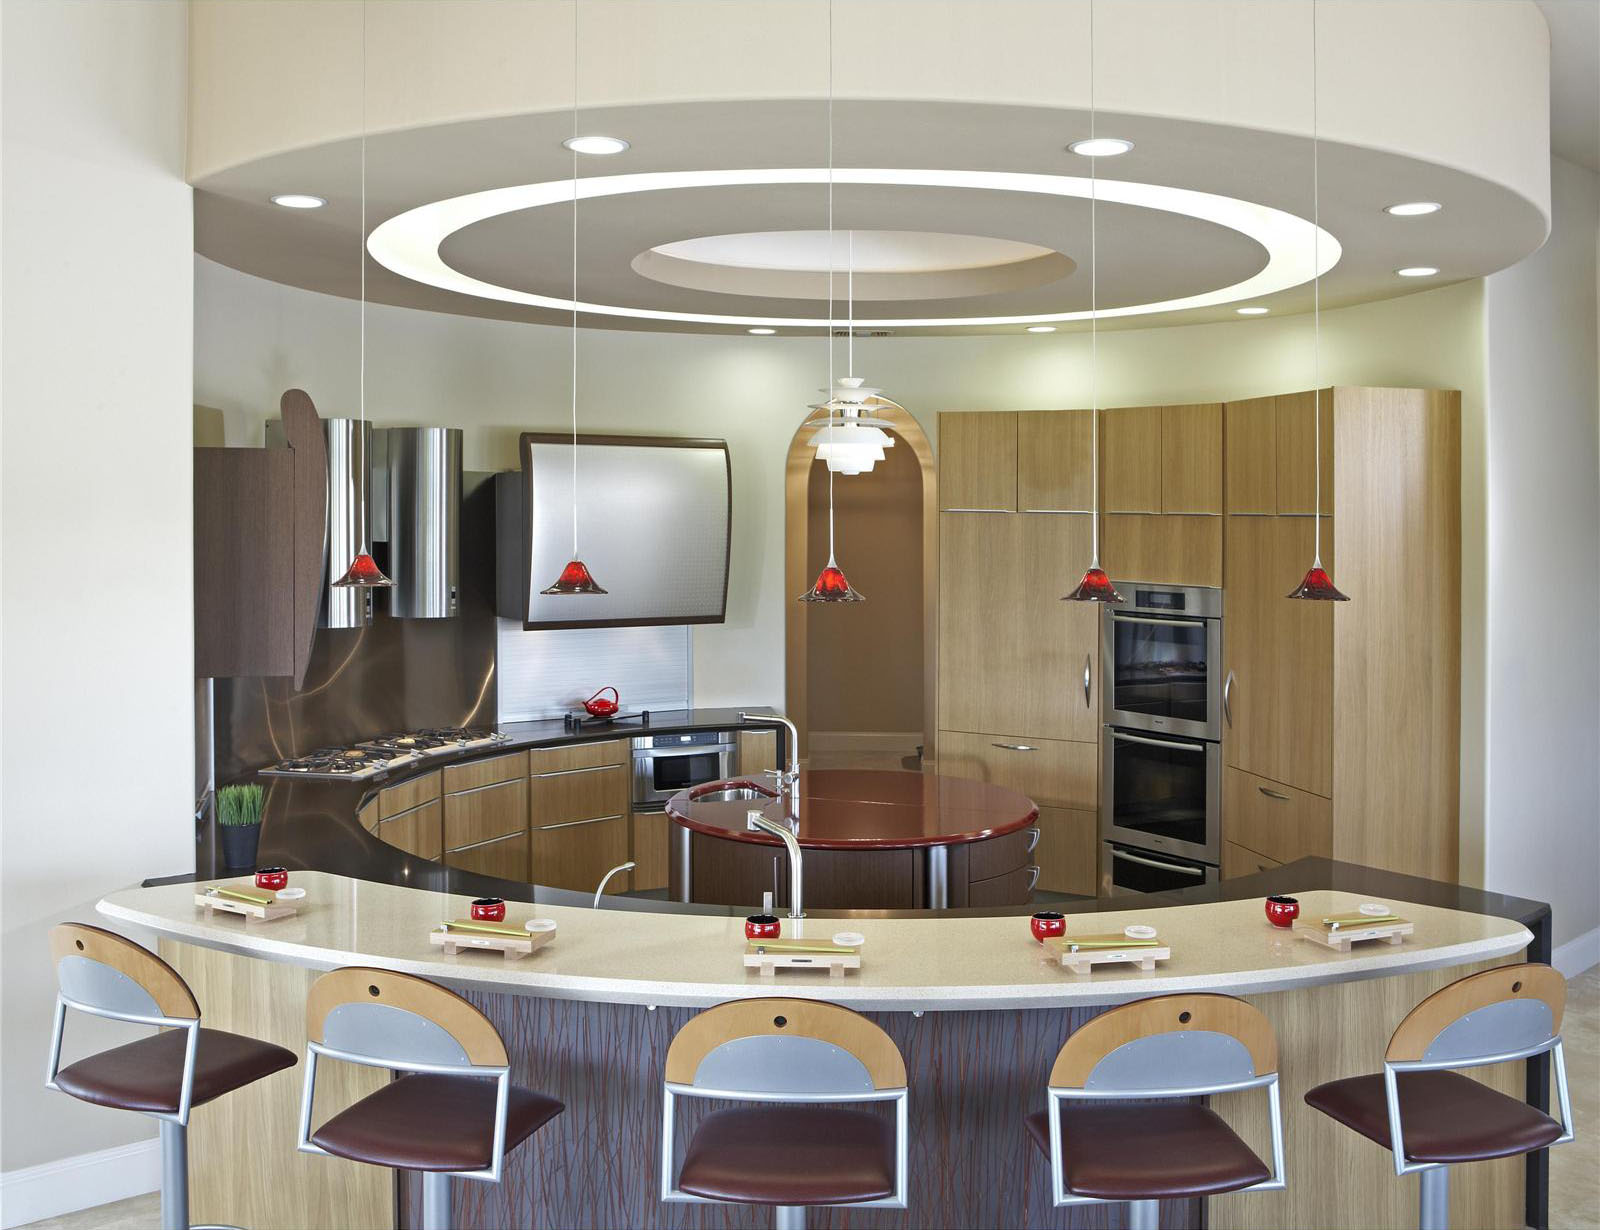 kitchen open contemporary modern bar island interior designs luxury cuisine idesignarch decorating curved amazing homeportfolio ceiling eating fresh round via